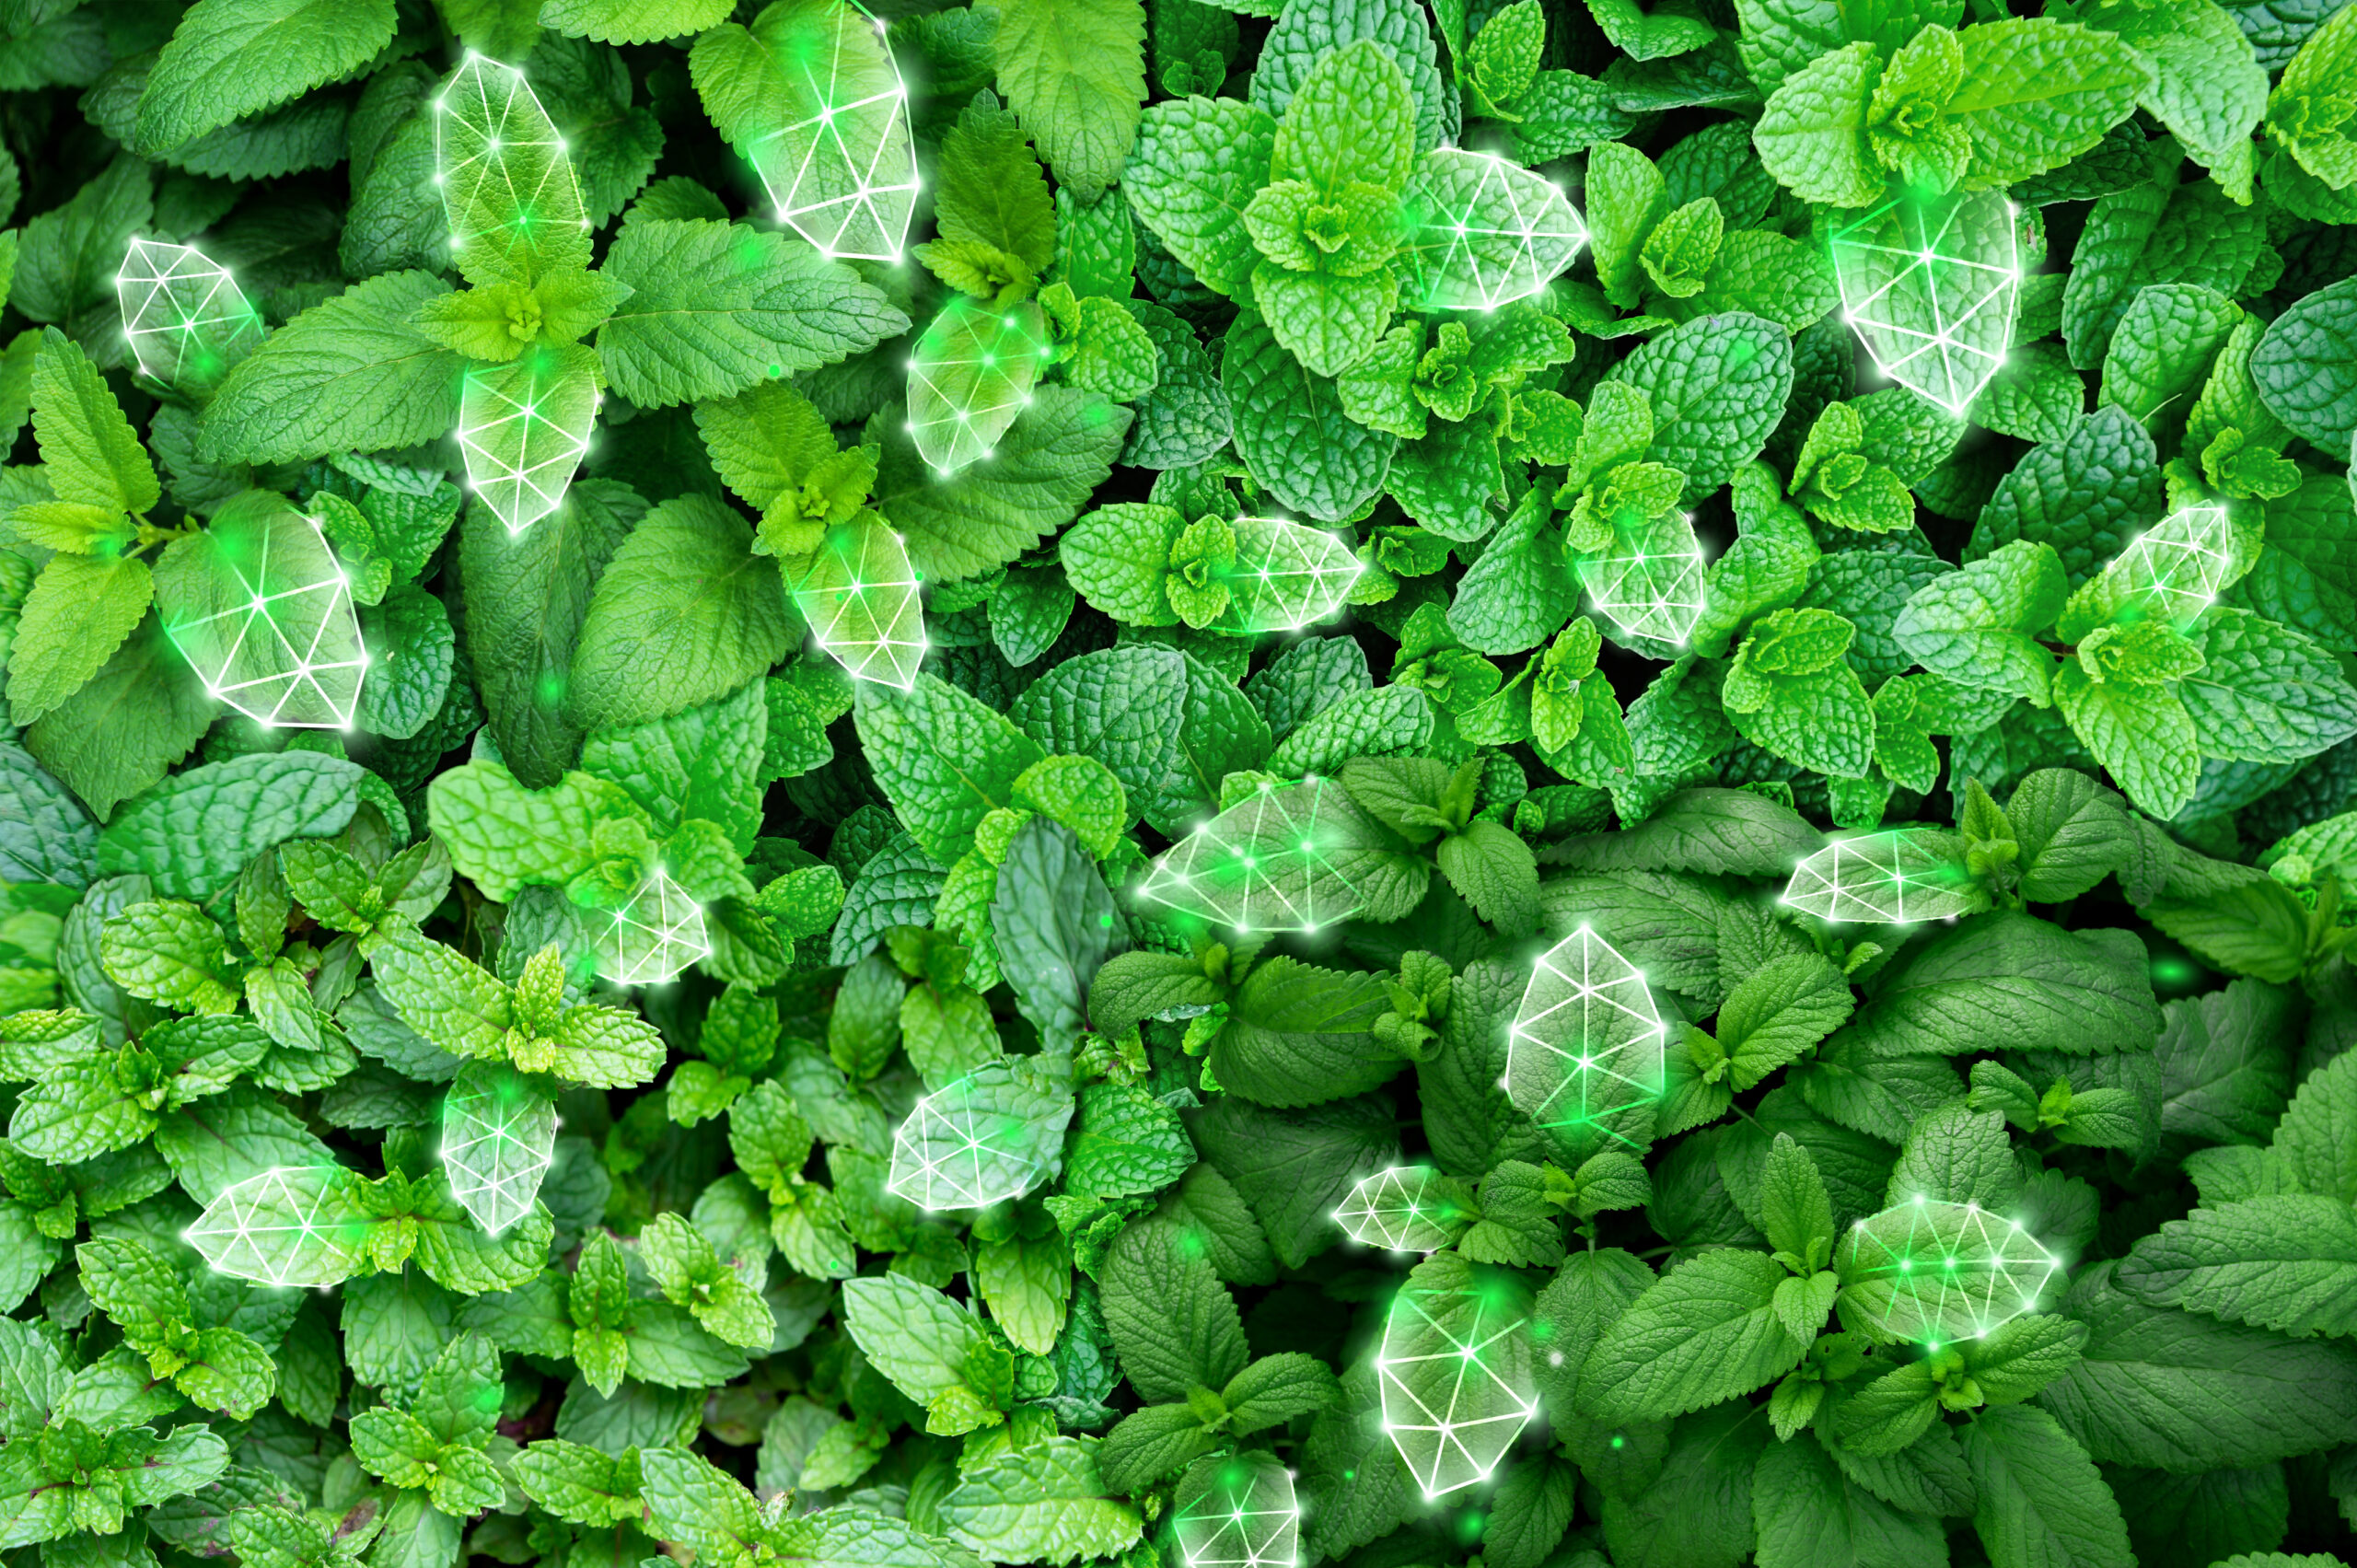 HeiQ Mint botanical odor control textile technology key visual